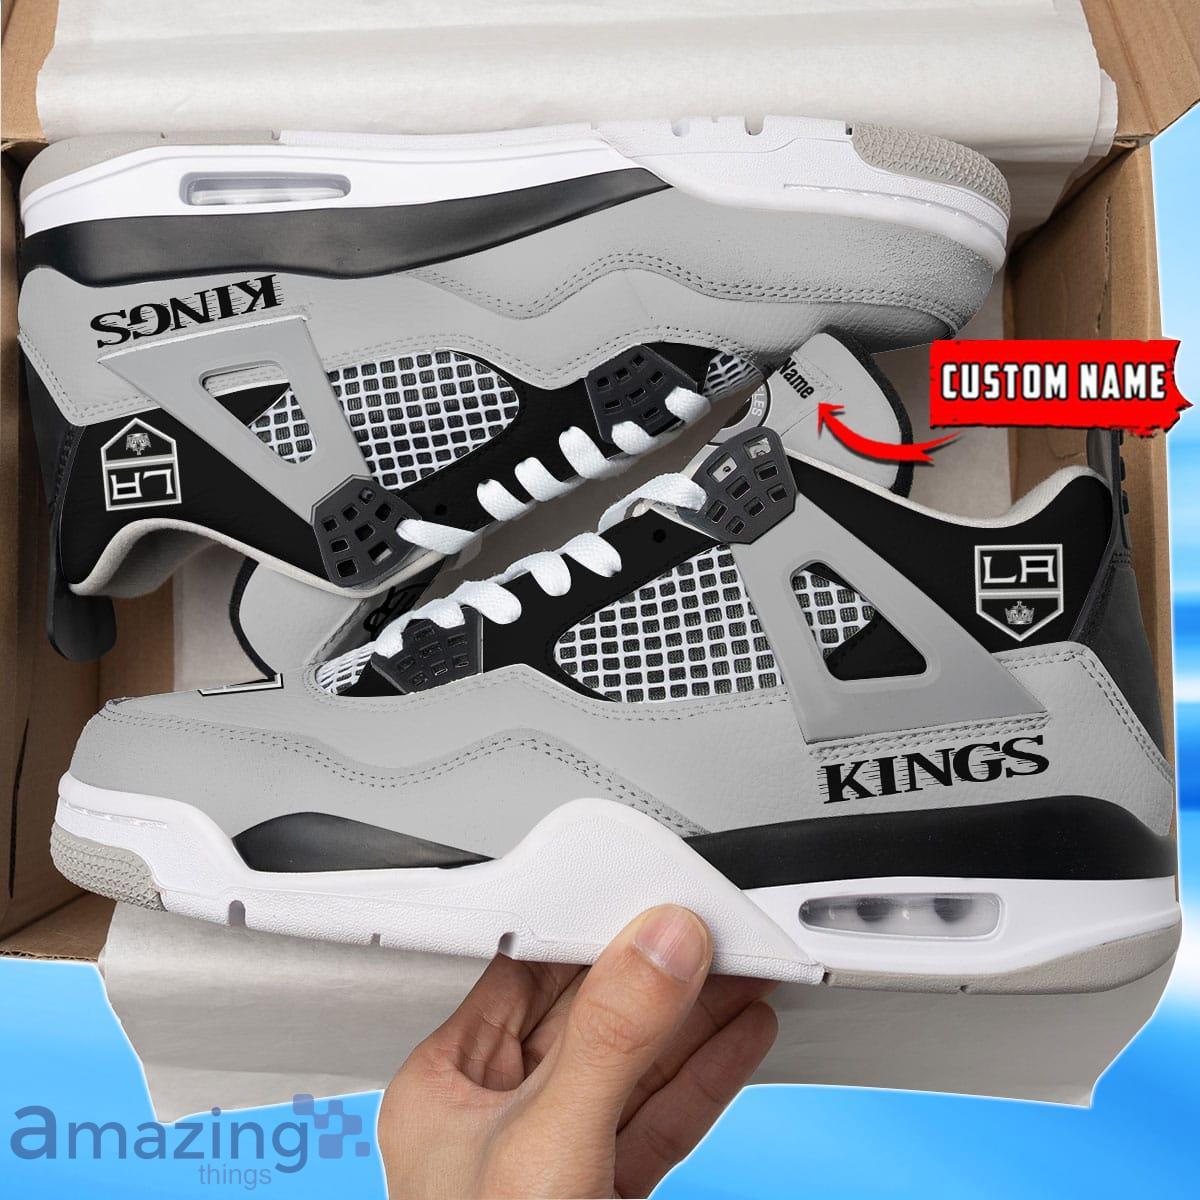 Los Angeles Kings Custom Name Air Jordan 4 Shoes Impressive Gift For Men Women Product Photo 1